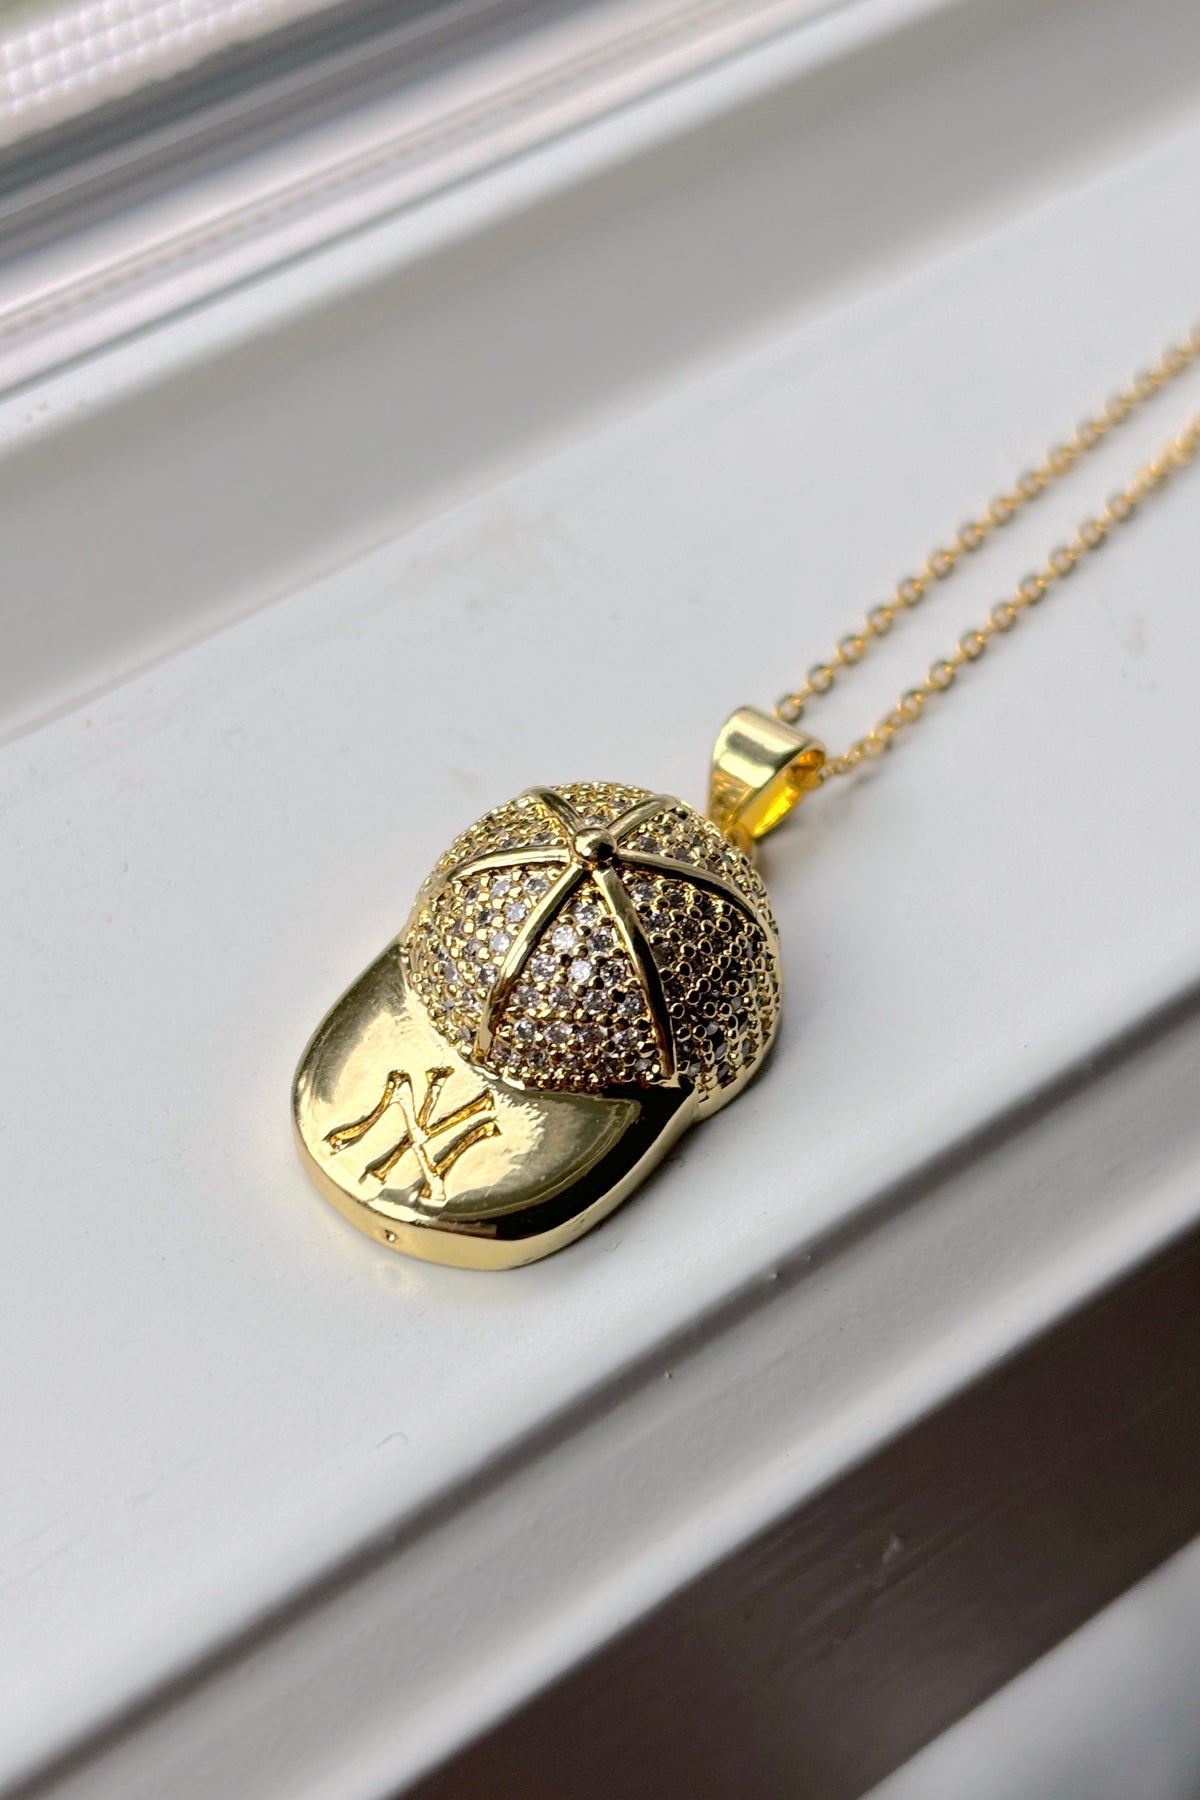 18k Gold NY Cap Pendant Necklace